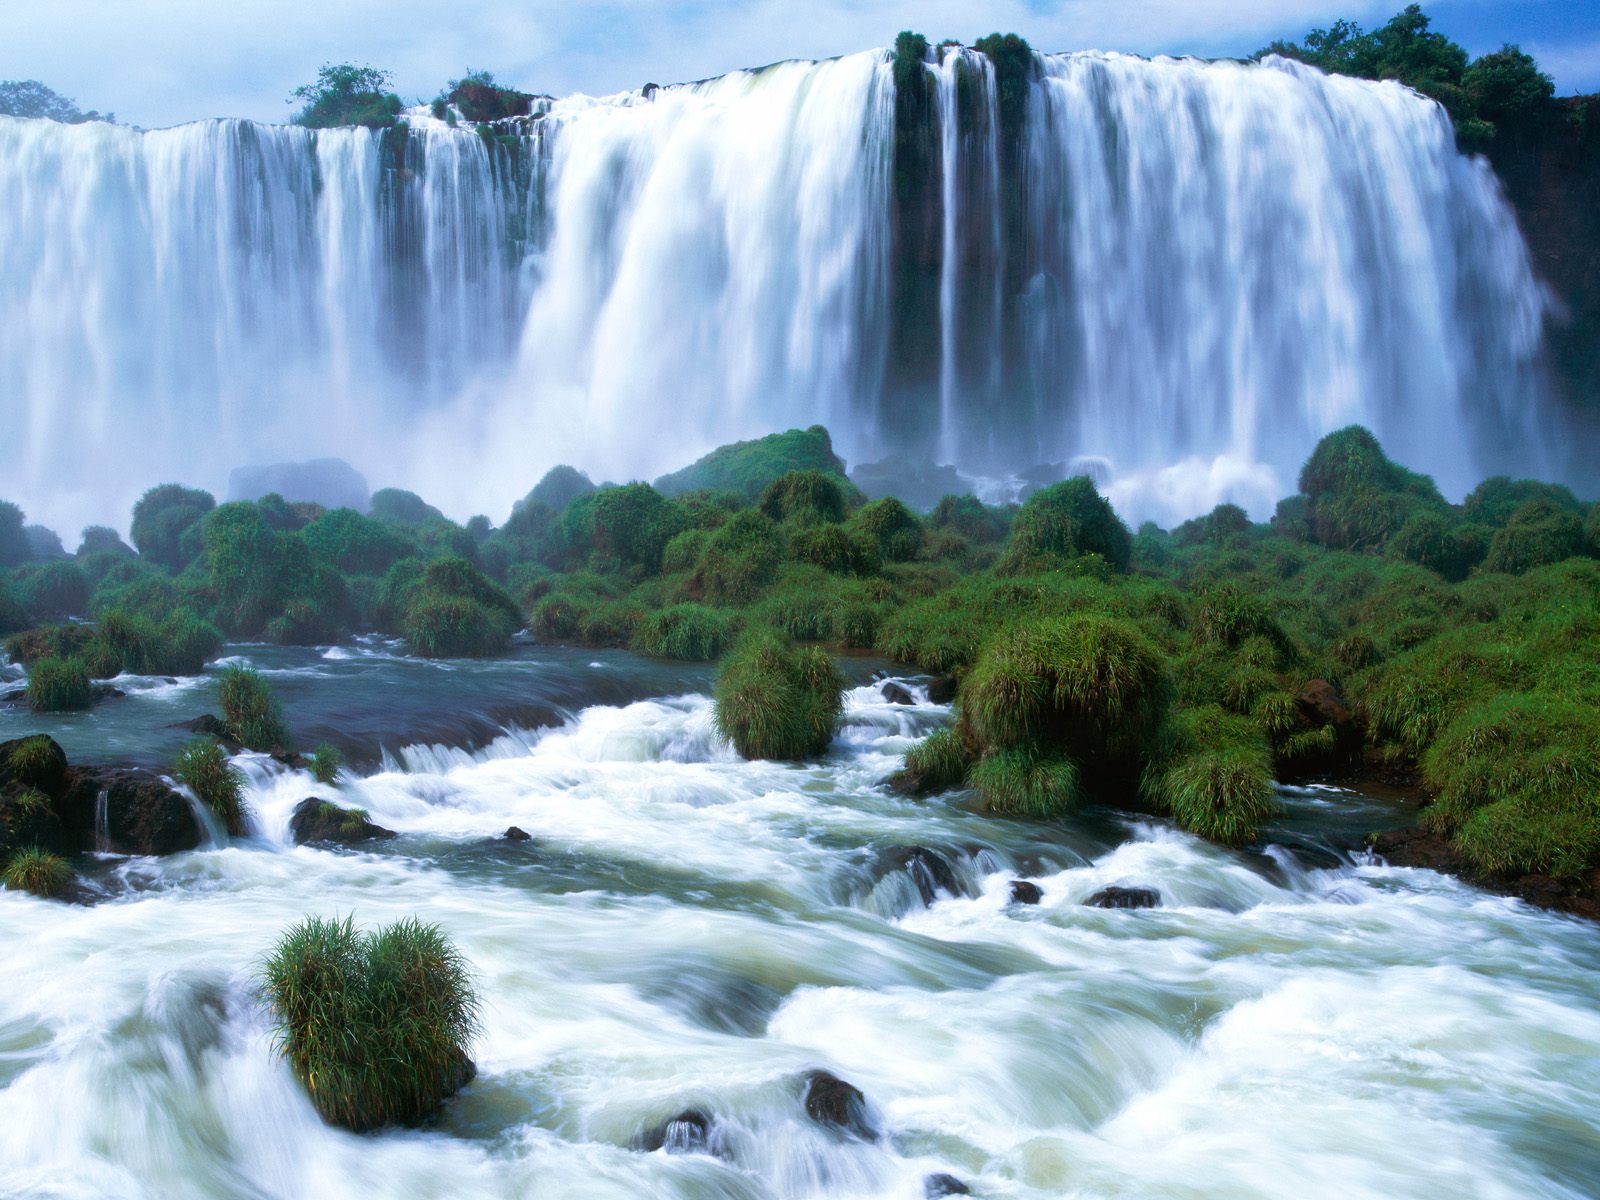 Blurred Waterfalls - Nice Wallpaper Of Nature - HD Wallpaper 